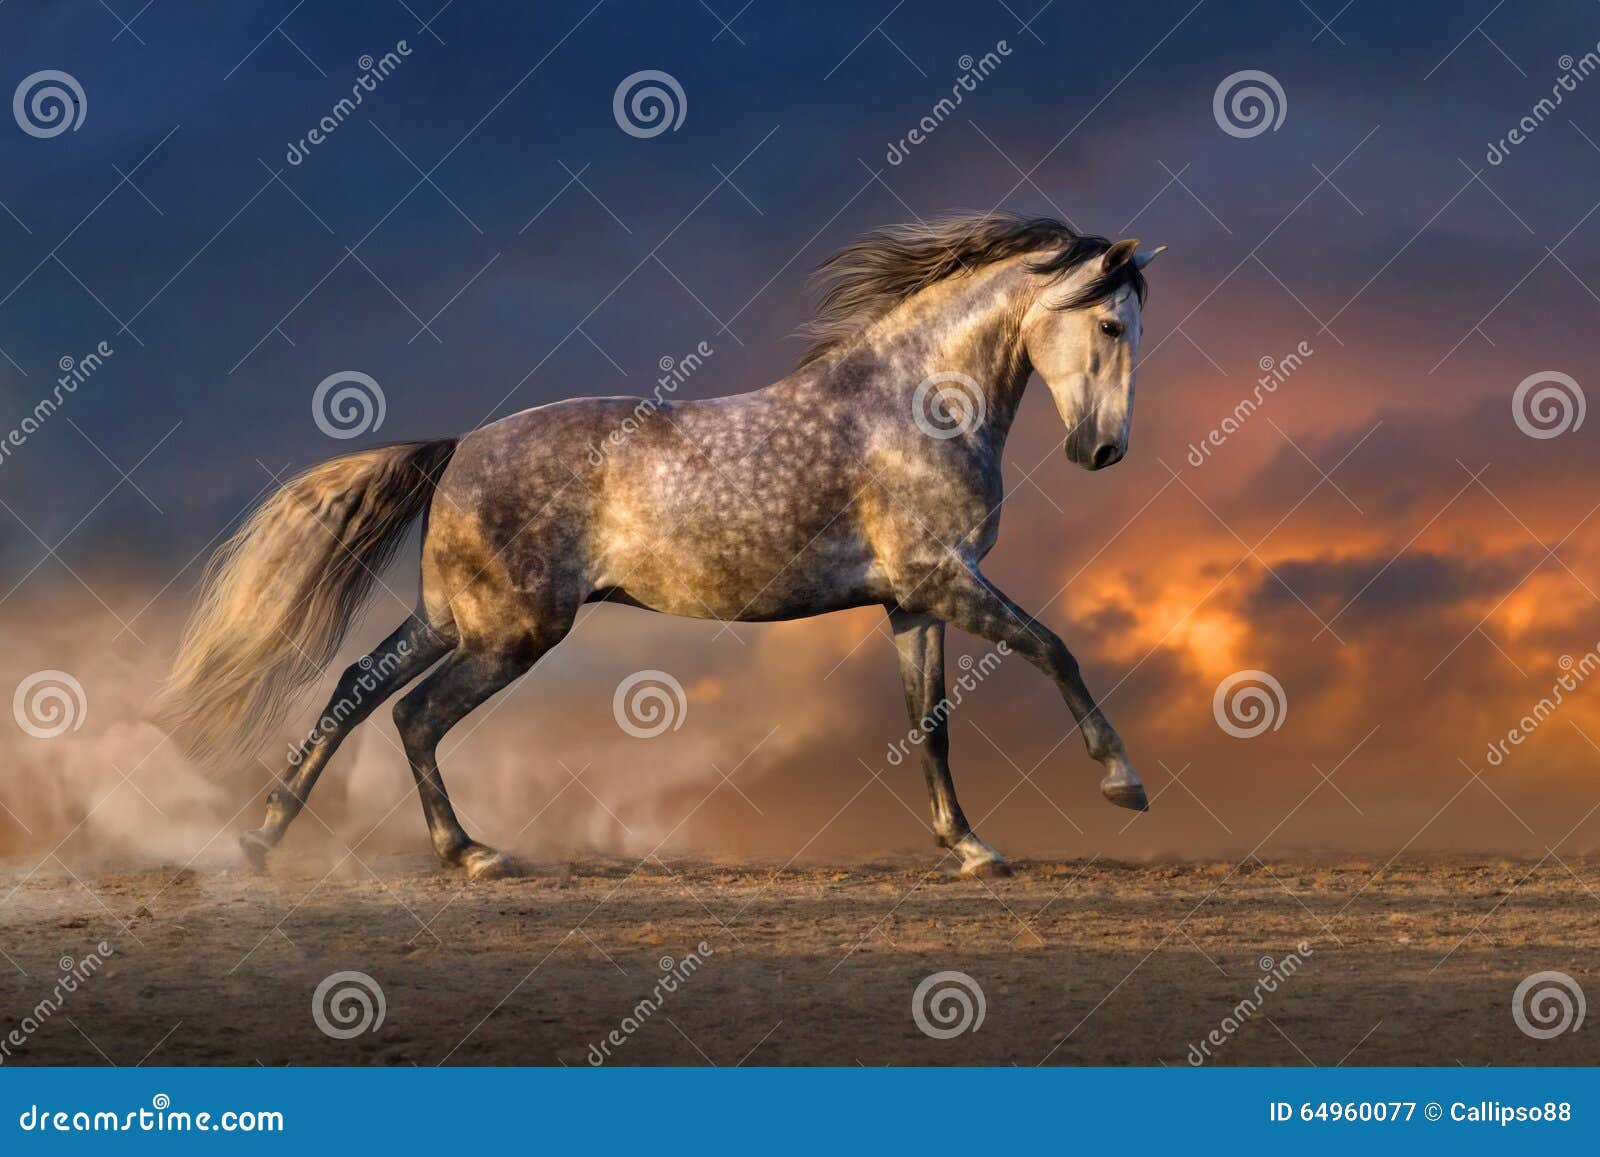 horse run gallop at sunset